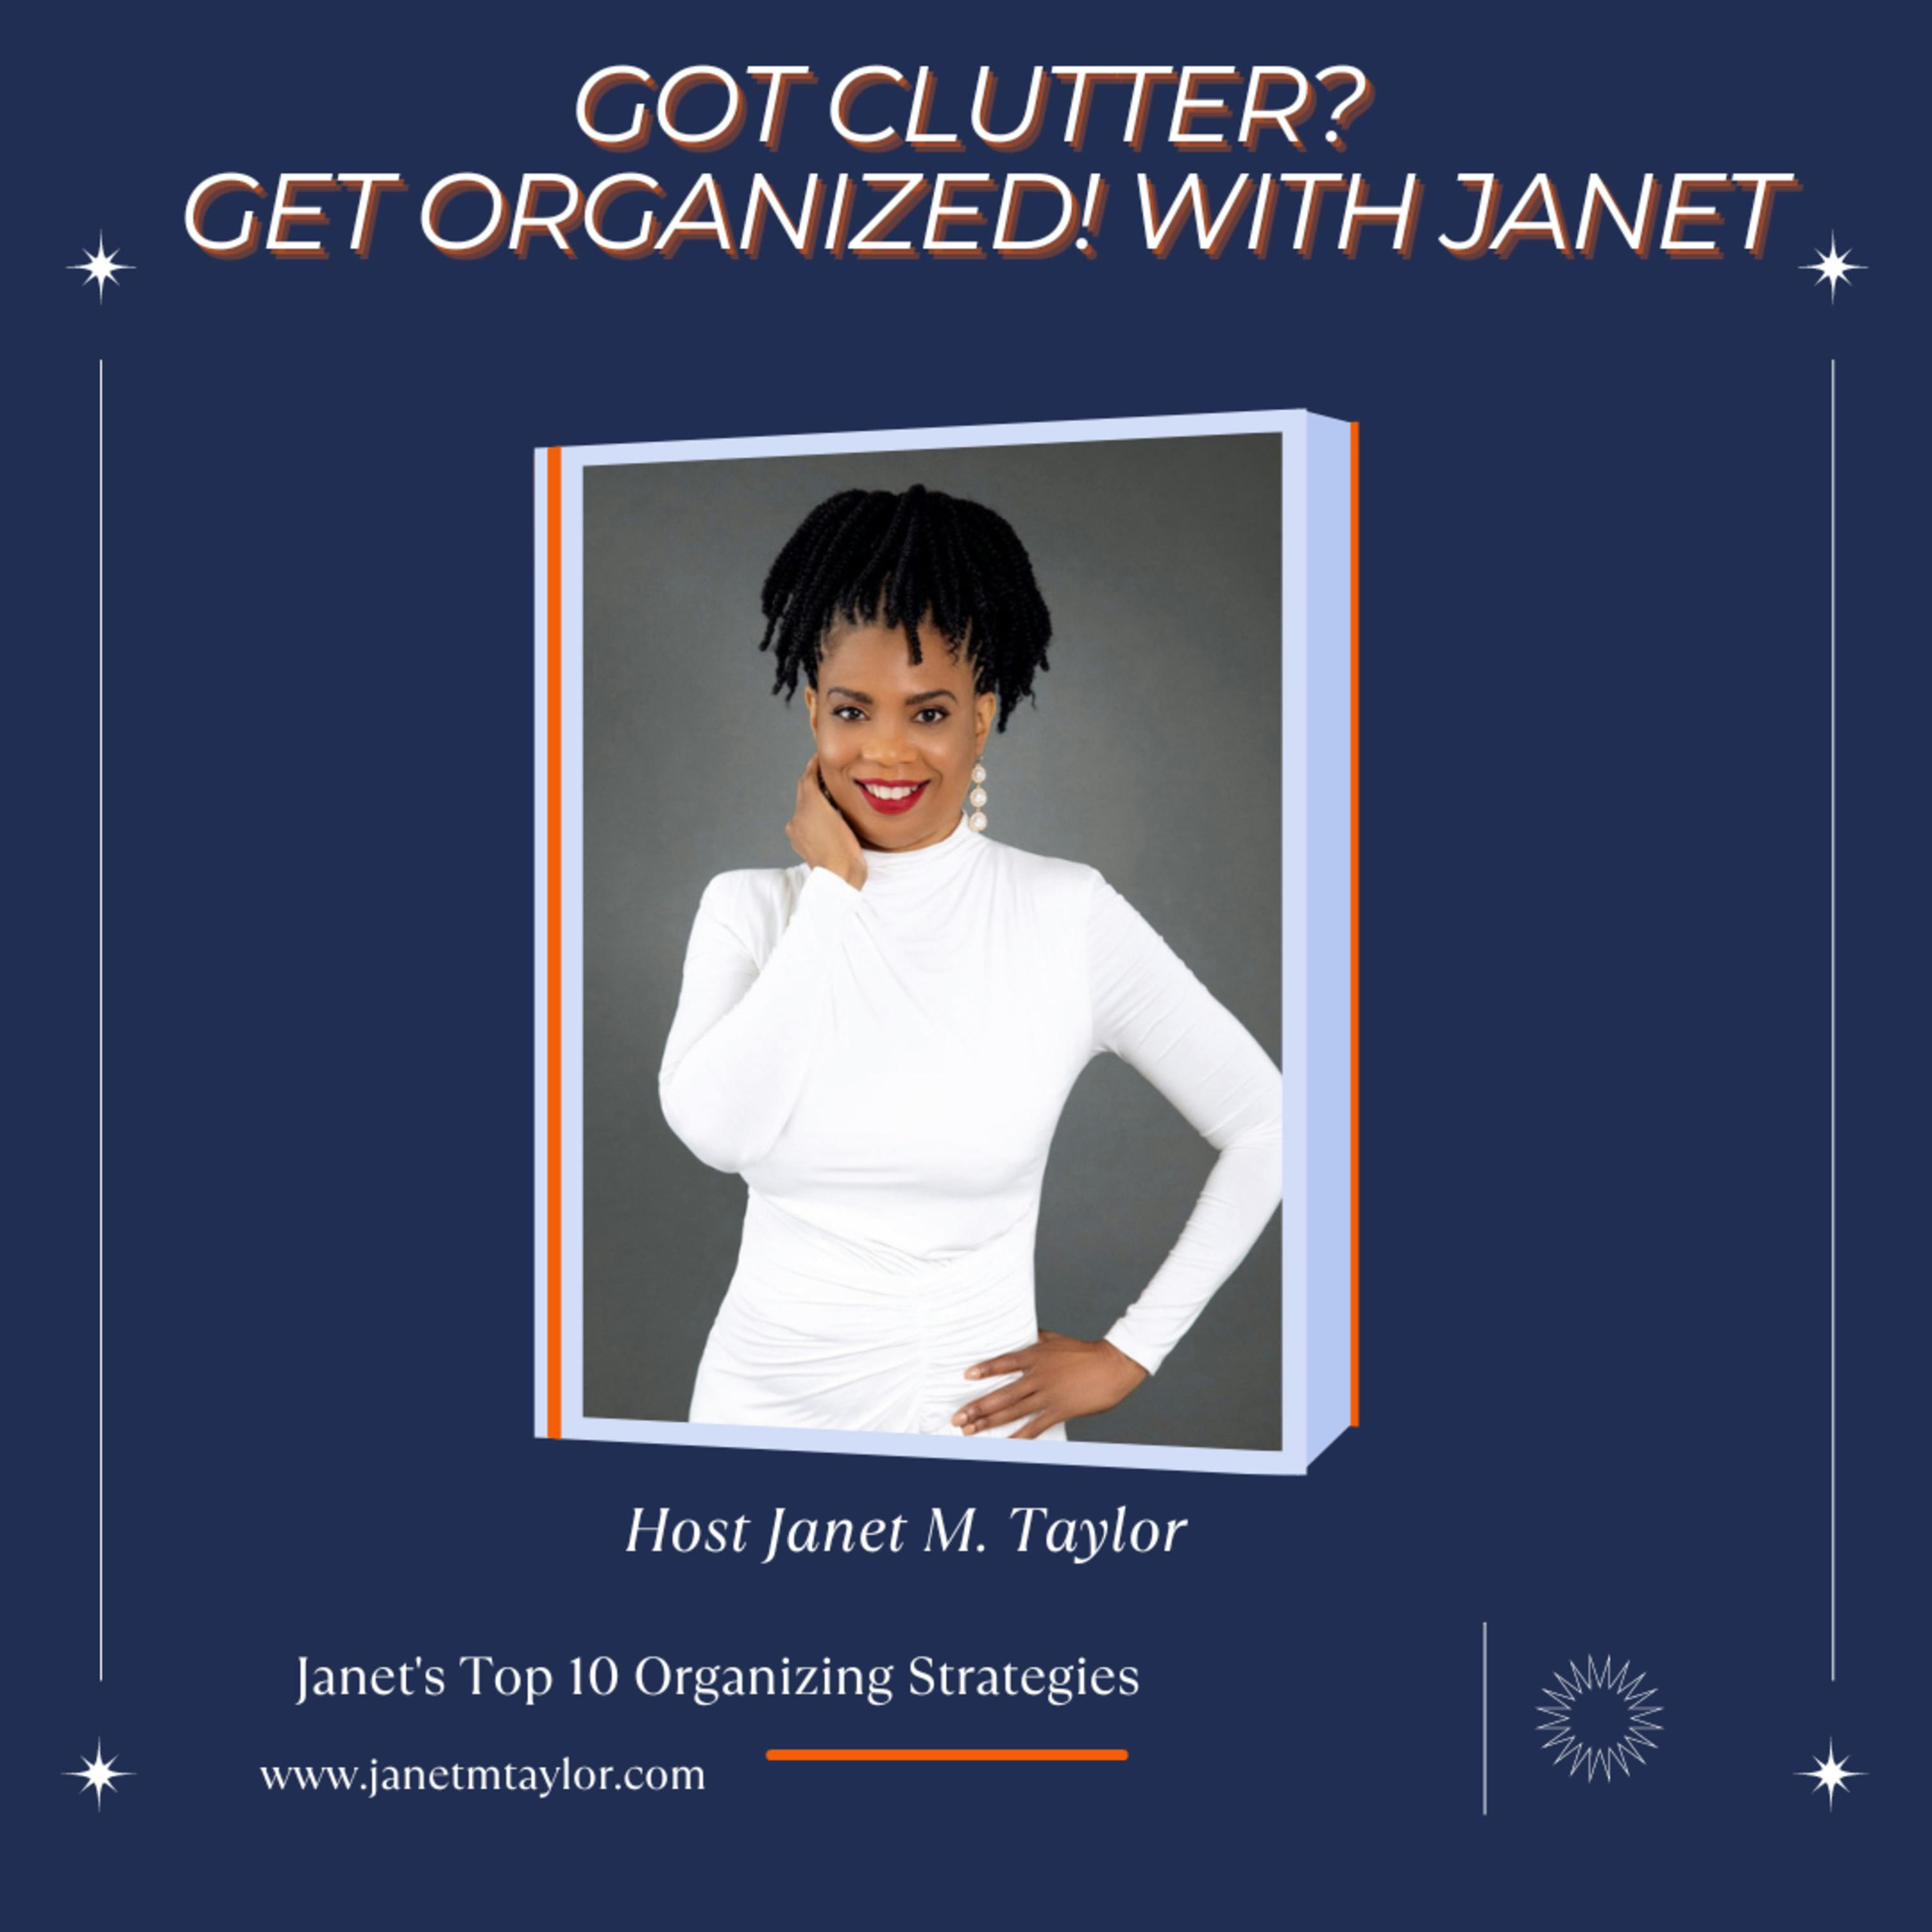 Janet's Top Ten Organizing Strategies